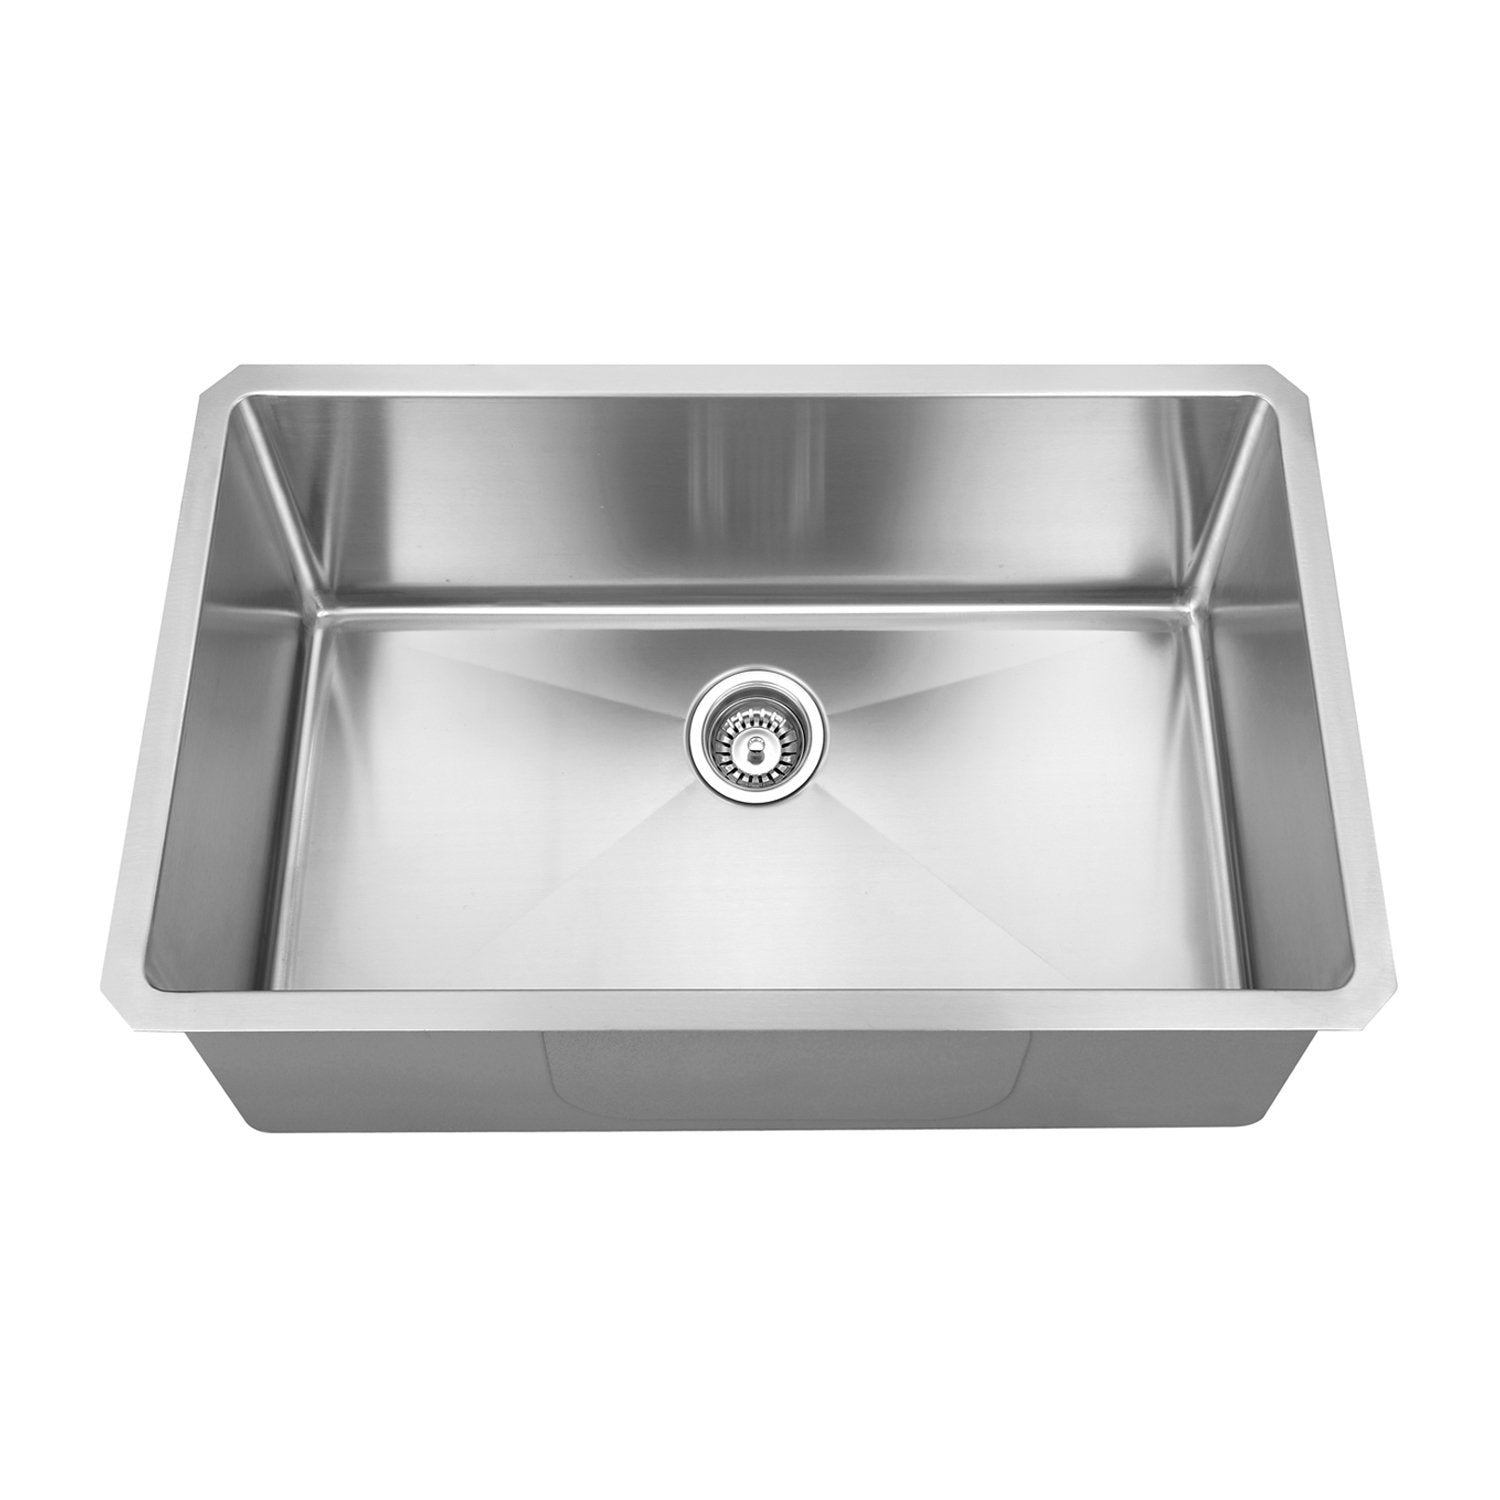 DAX Handmade Single Bowl Undermount Kitchen Sink, 18 Gauge Stainless Steel, Brushed Finish, 28 x 18 x 10 Inches (DAX-2818R10)